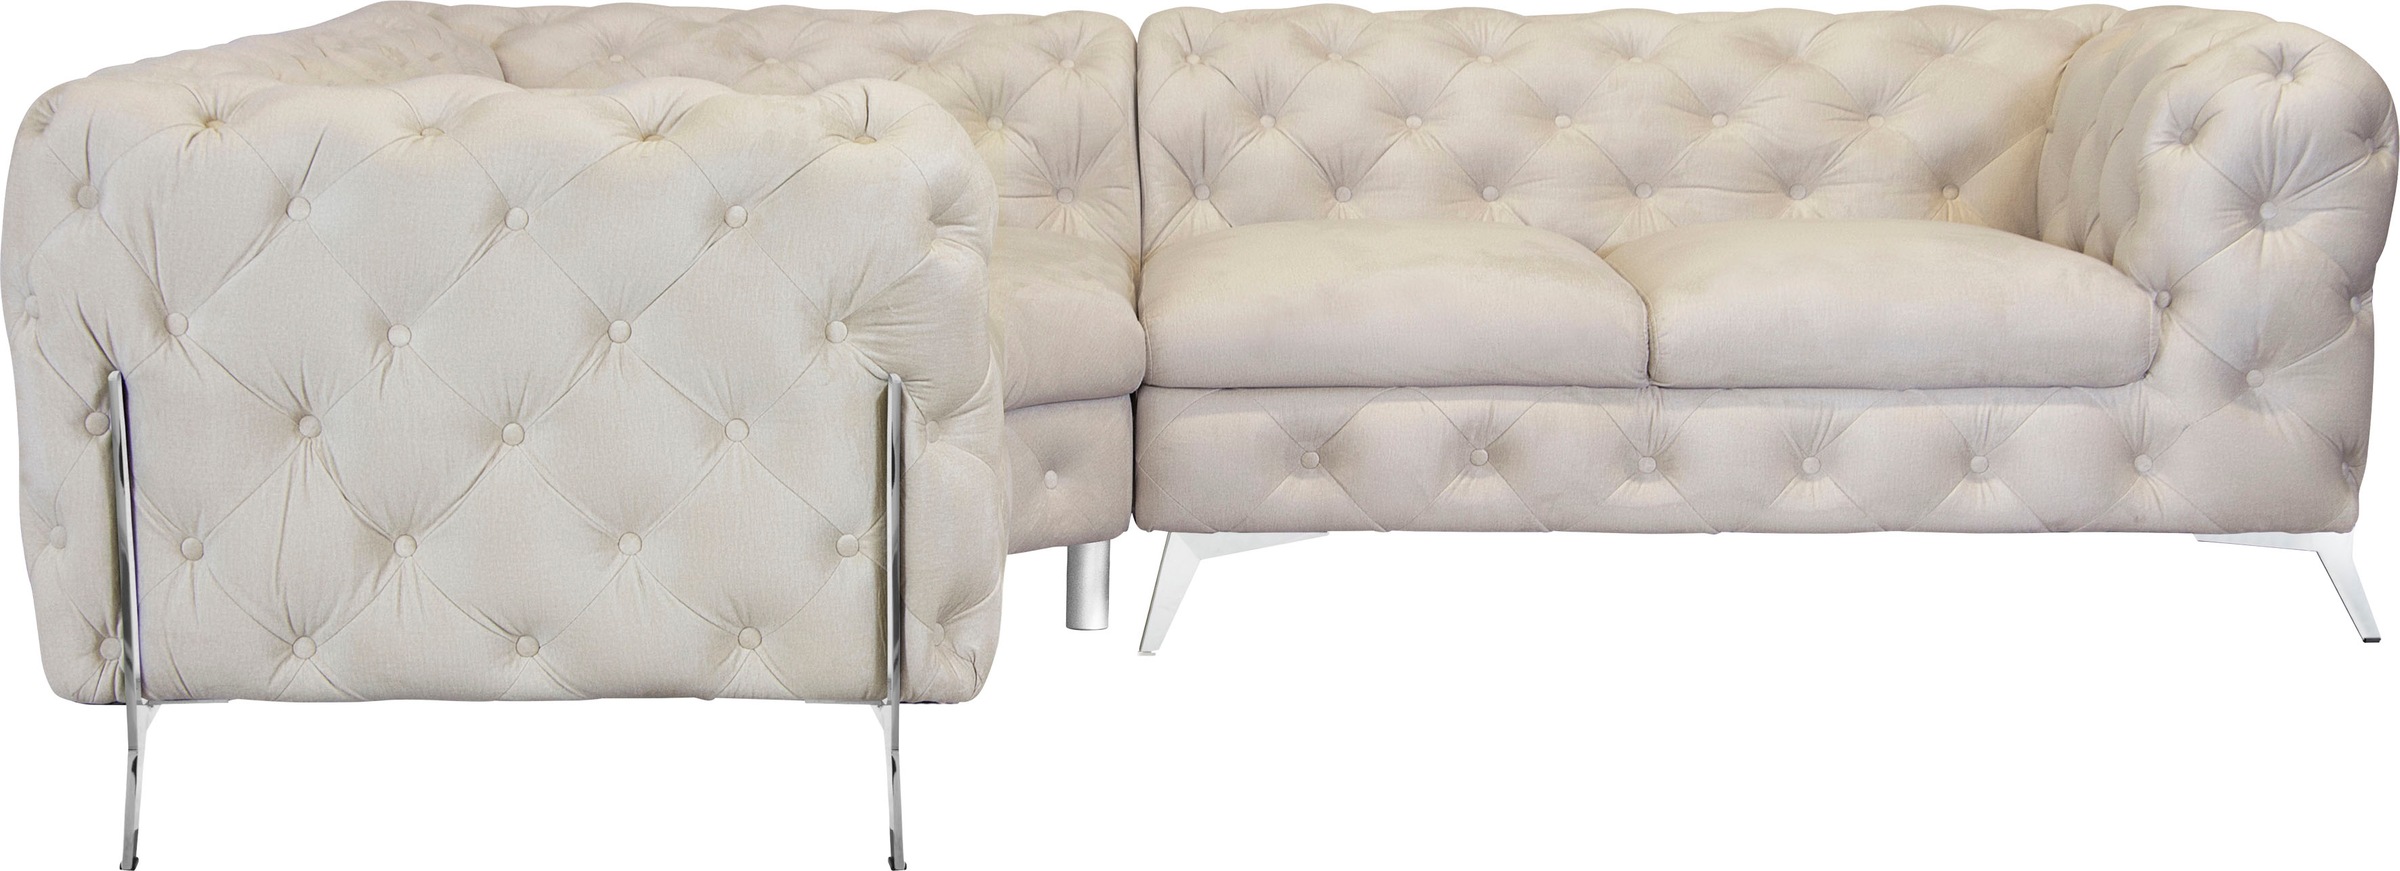 Leonique Chesterfield-Sofa »Amaury L-Form«, moderne Chersterfield-Optik, Breite 262 cm, Fußfarbe wählbar